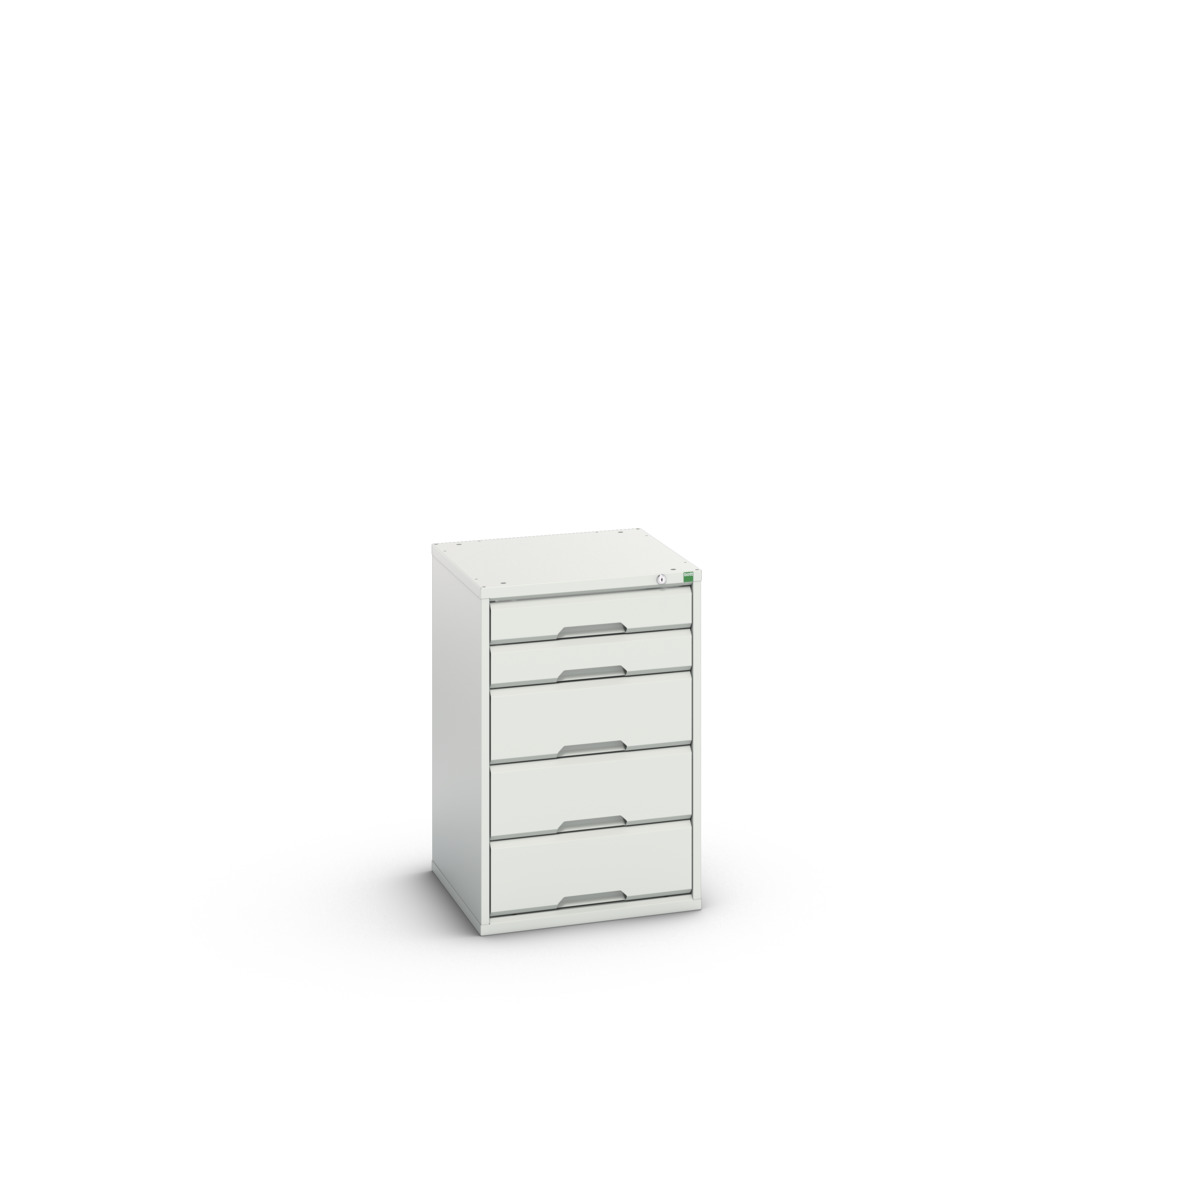 16925312.16 - verso drawer cabinet